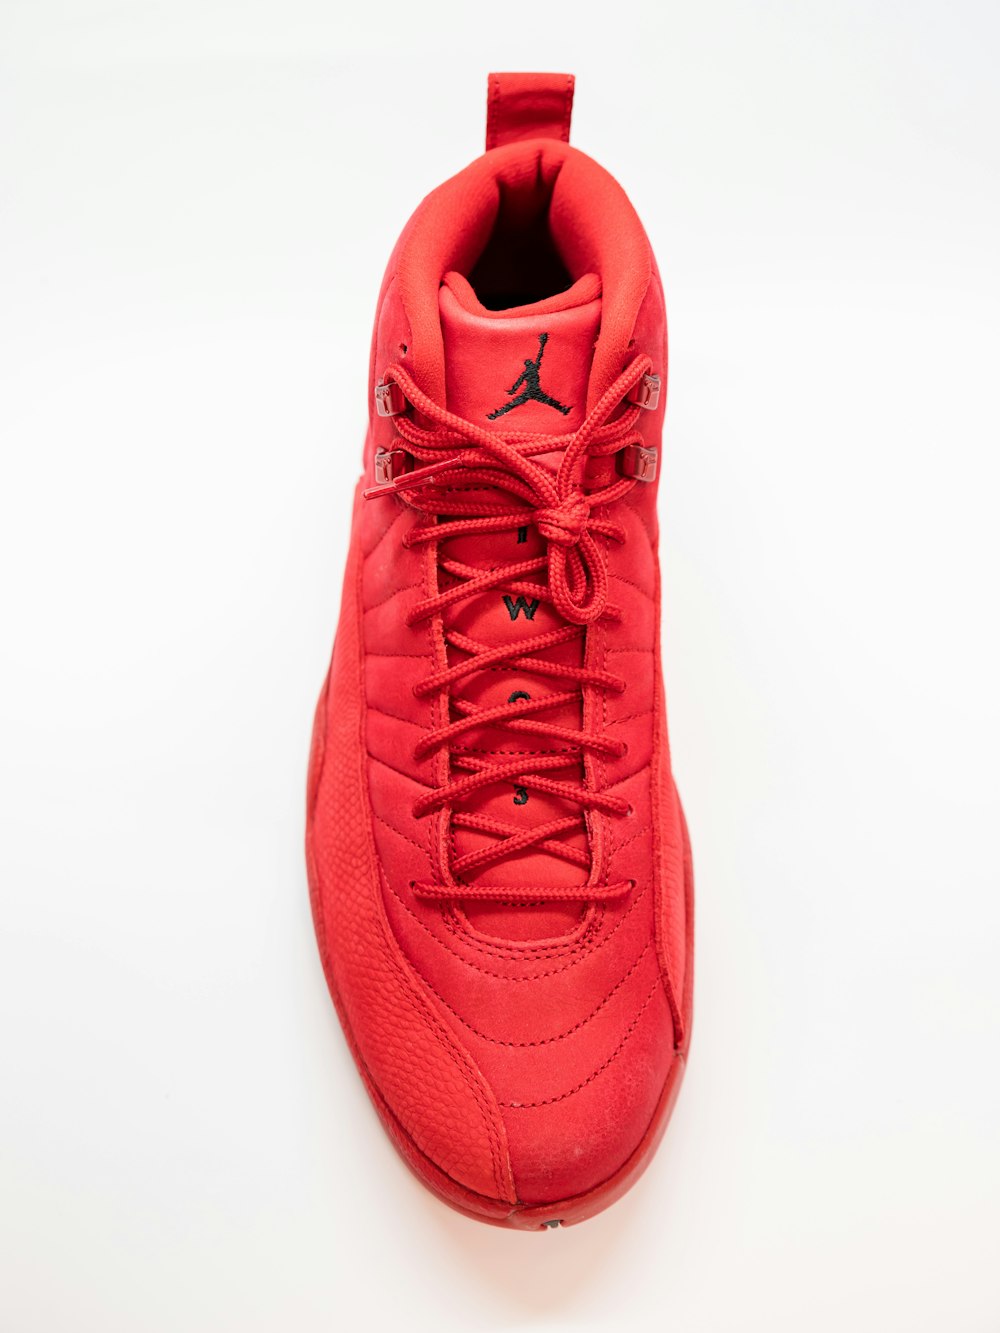 pair of red Air Jordan 12's photo – Free Red Image on Unsplash